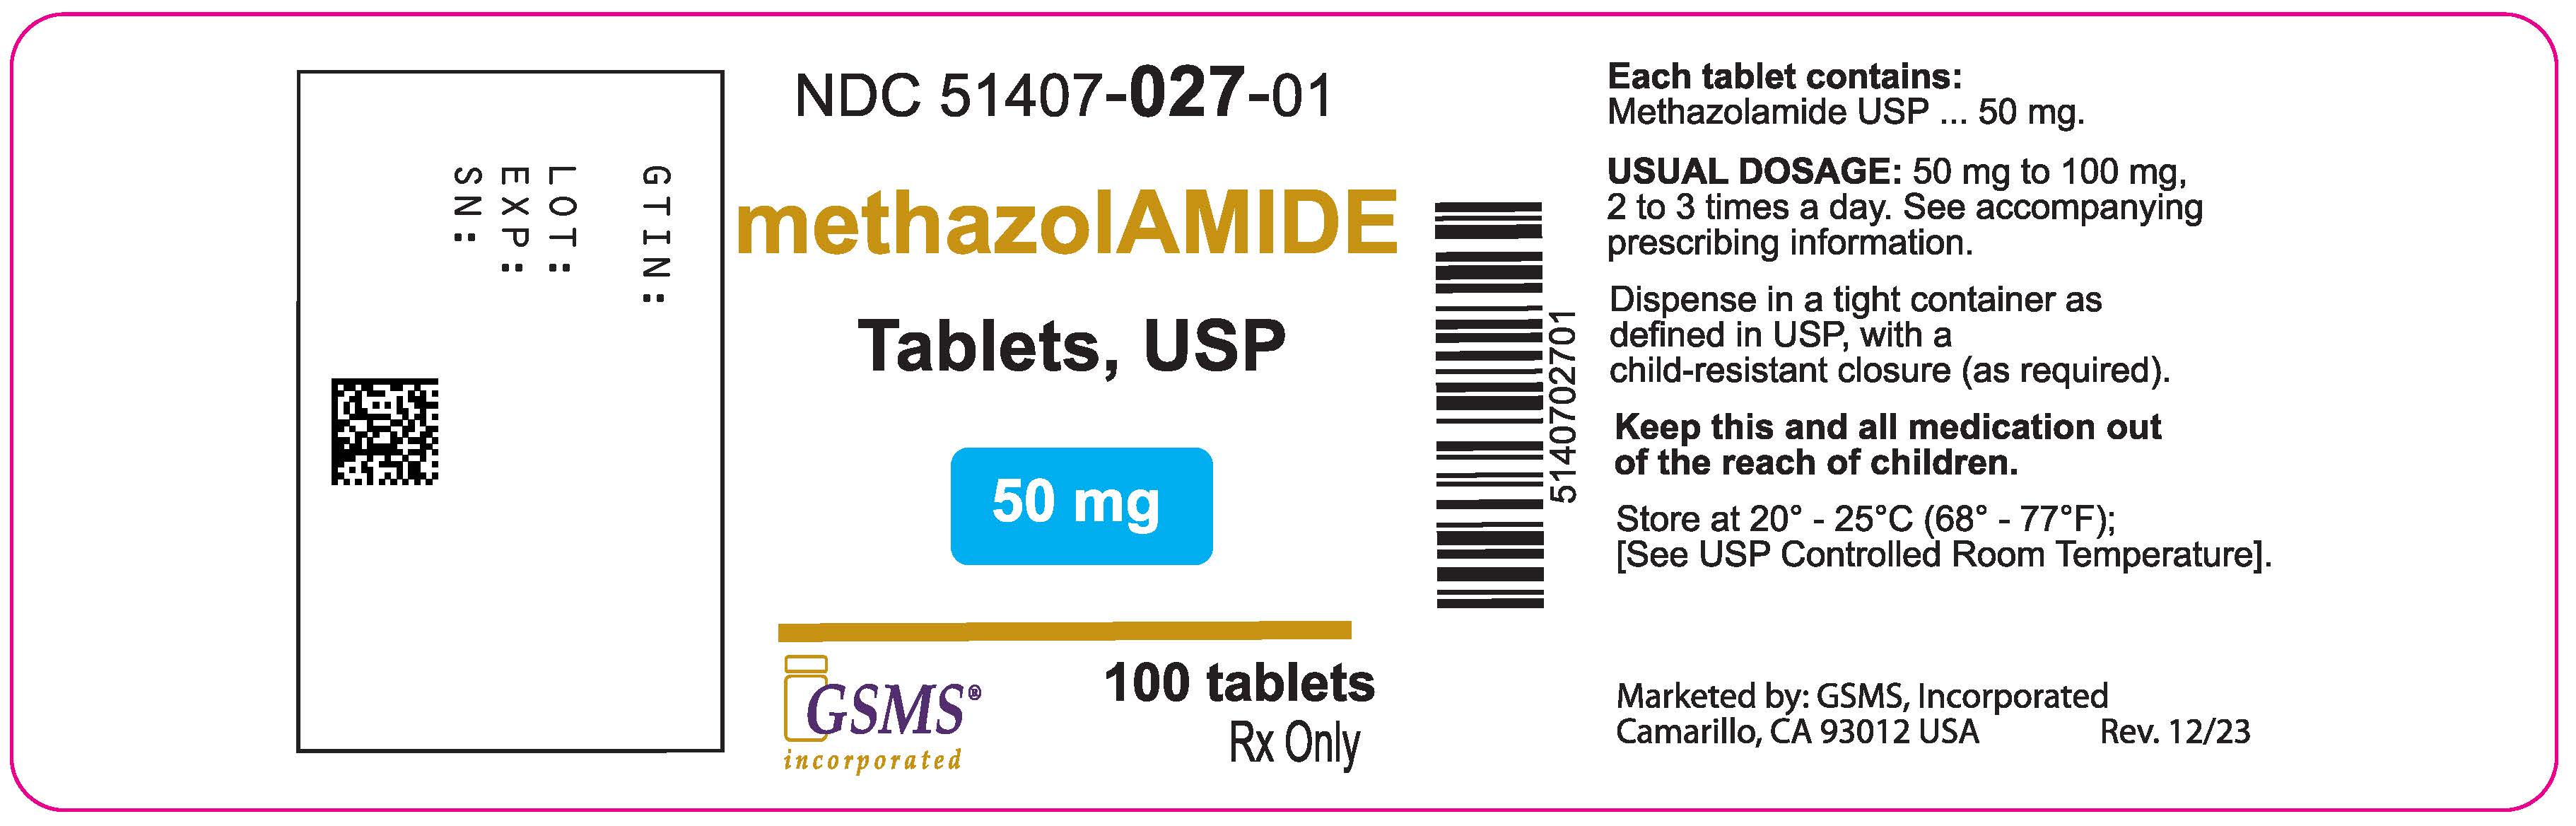 51407-027-01OL - Methazolamide 50 mg - Rev. 1223.jpg